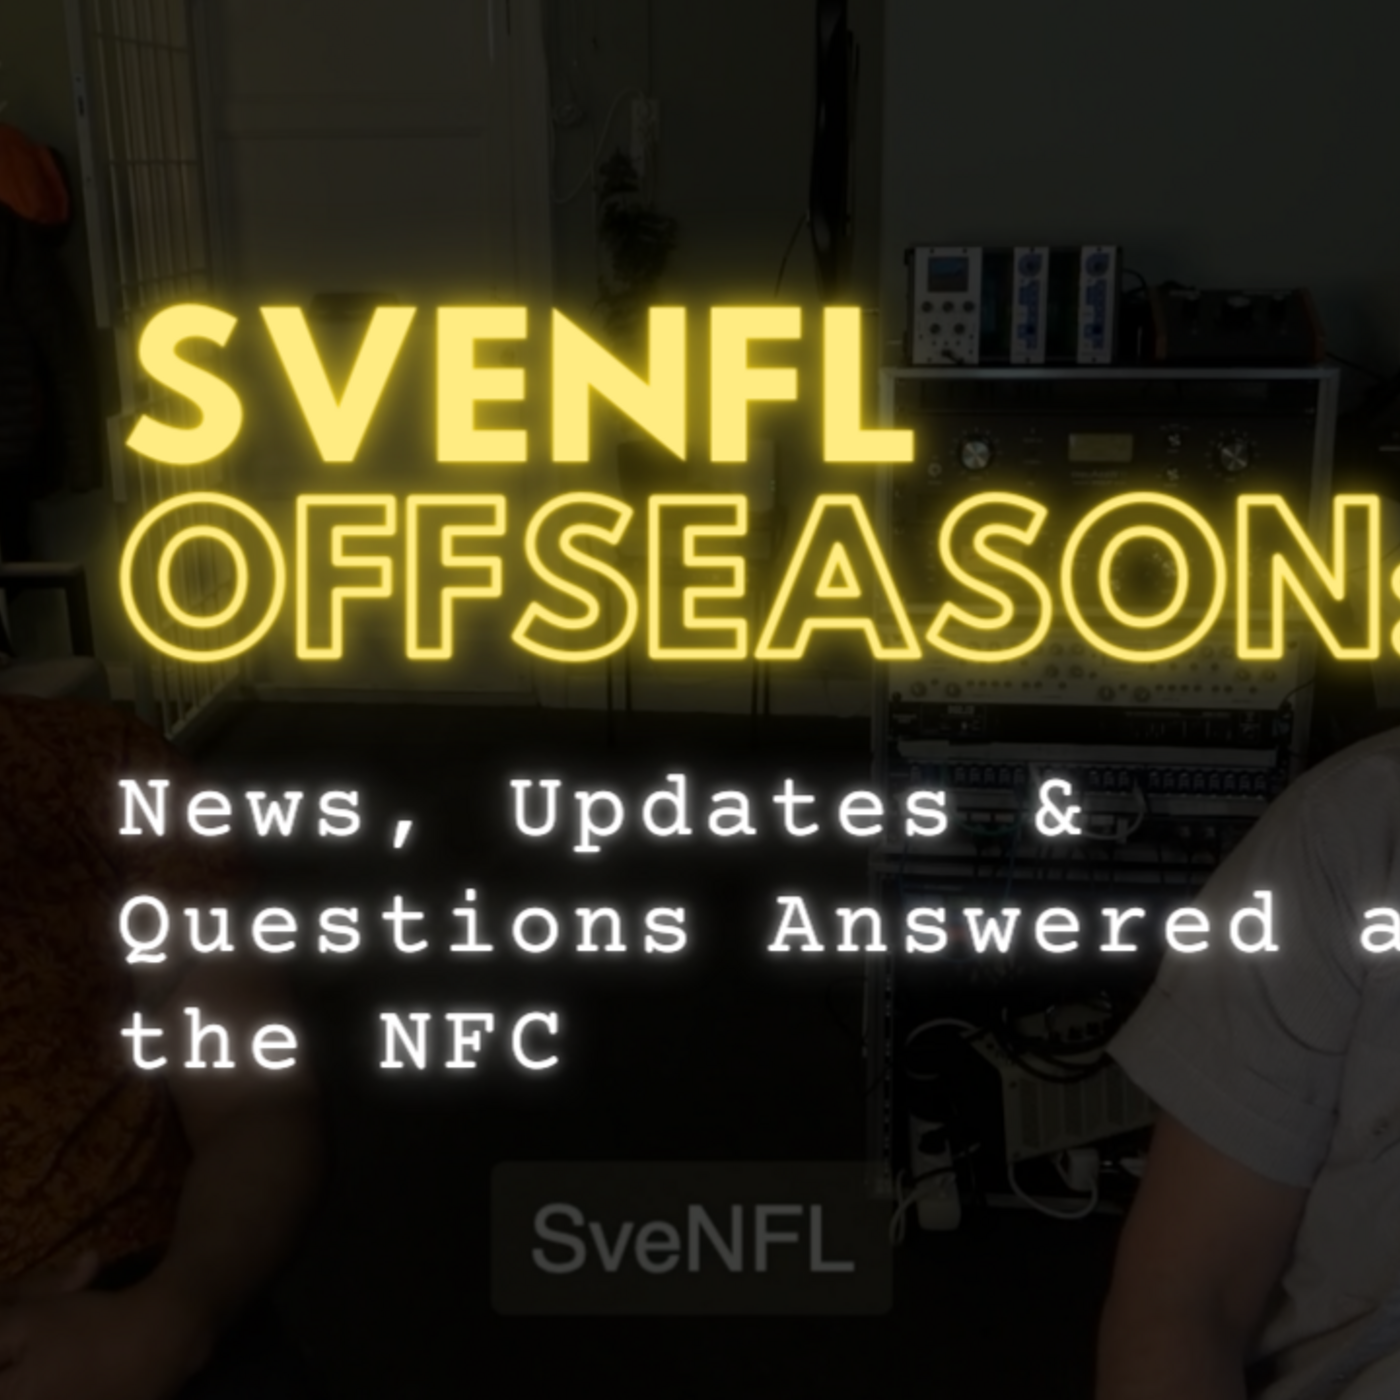 SveNFL 2022 Offseason: News, Updates & NFC Questions Answered